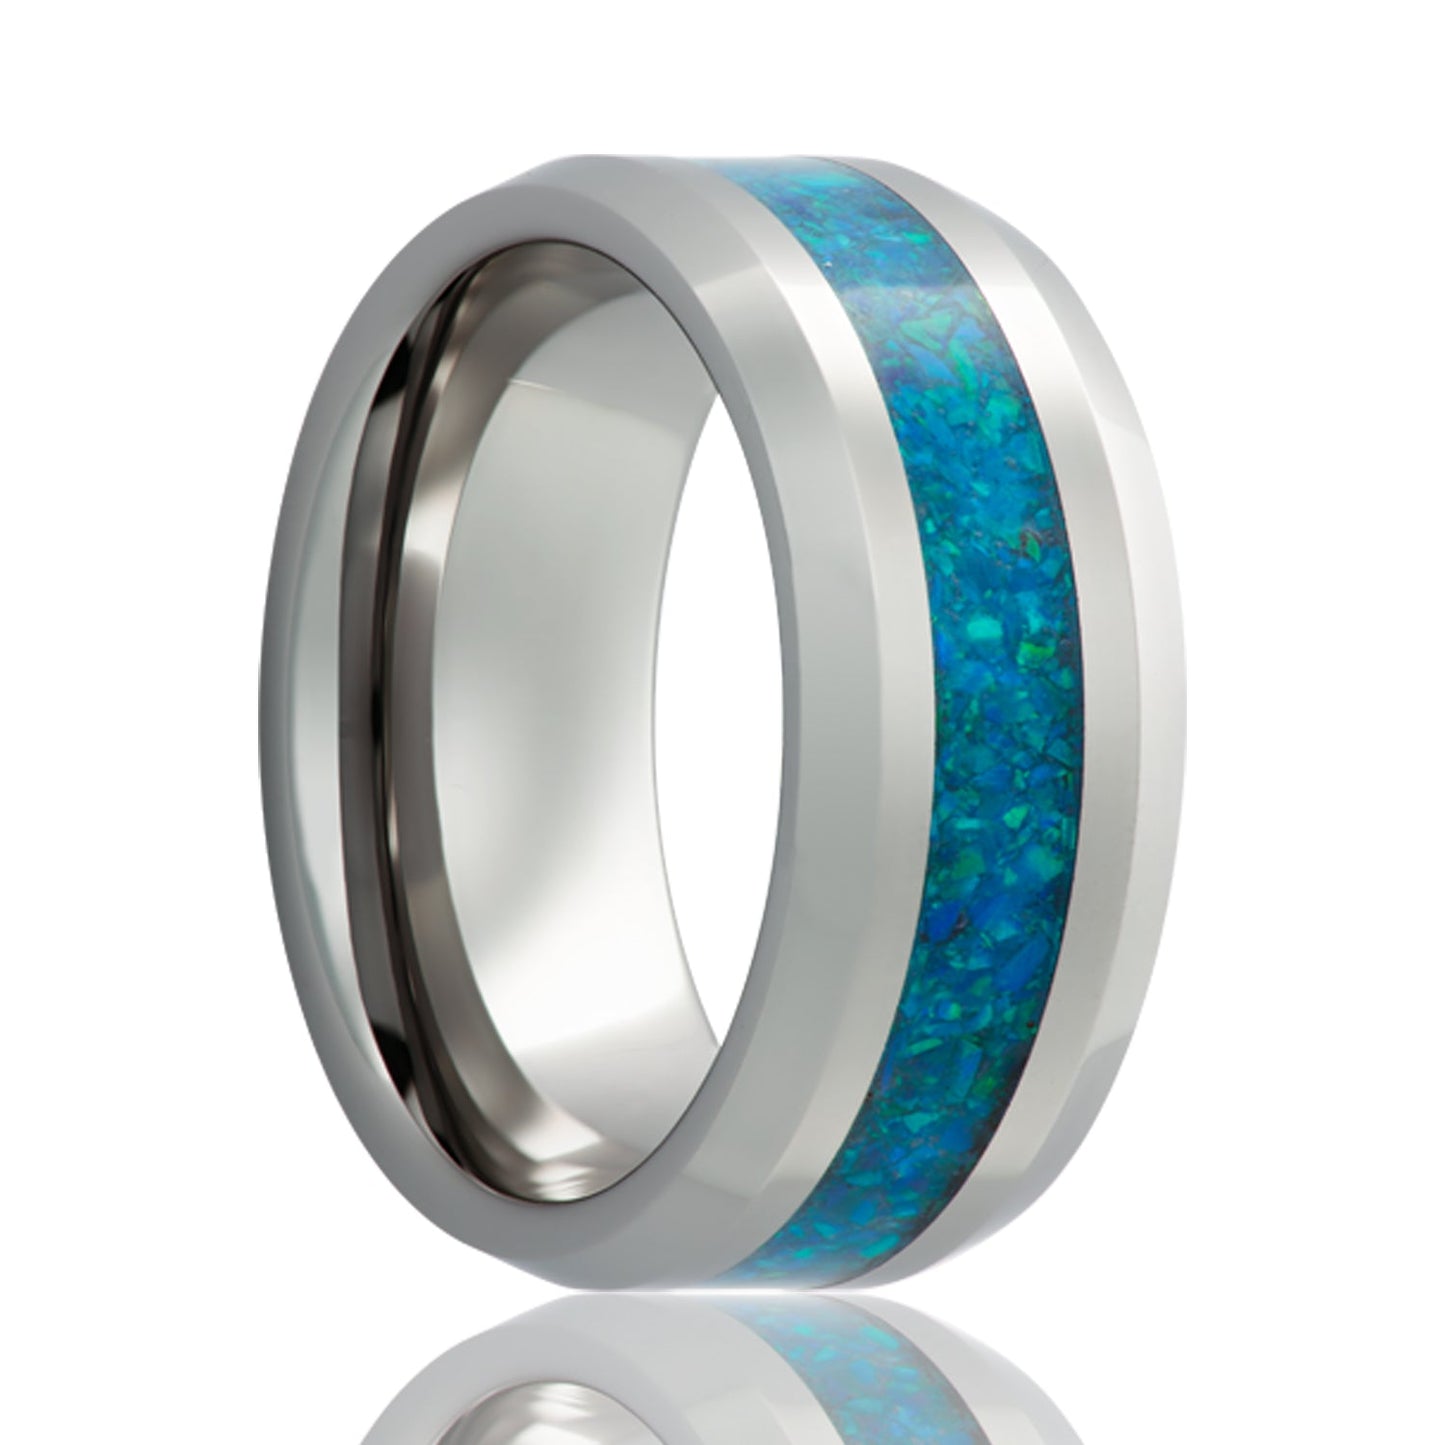 Blue Opal Inlay Cobalt Wedding Band with Beveled Edges